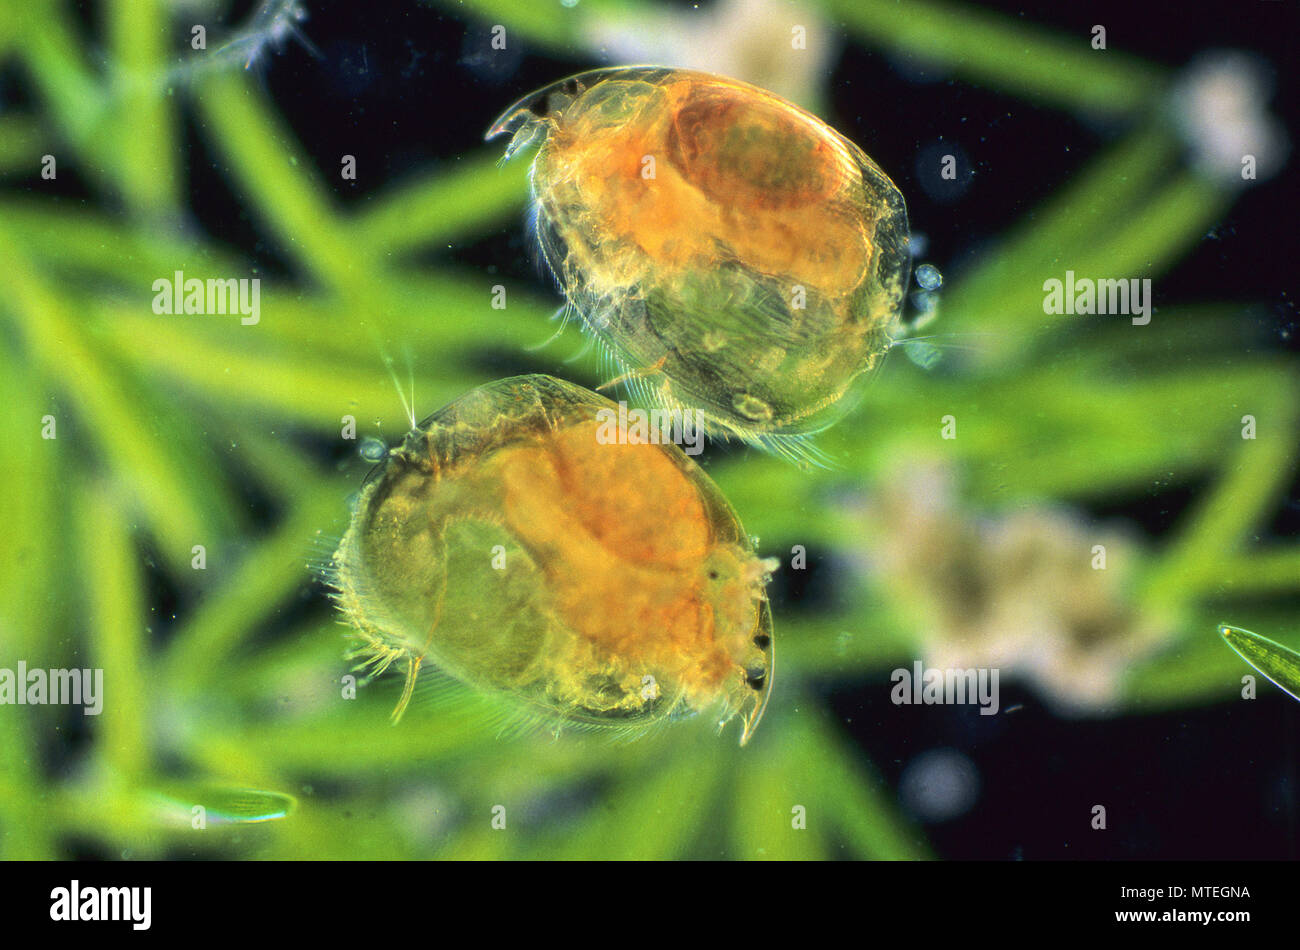 Daphnia pulex.Water flea with eggs.Copepod.Crustacean.Invertebrate.Optic microscopy Stock Photo